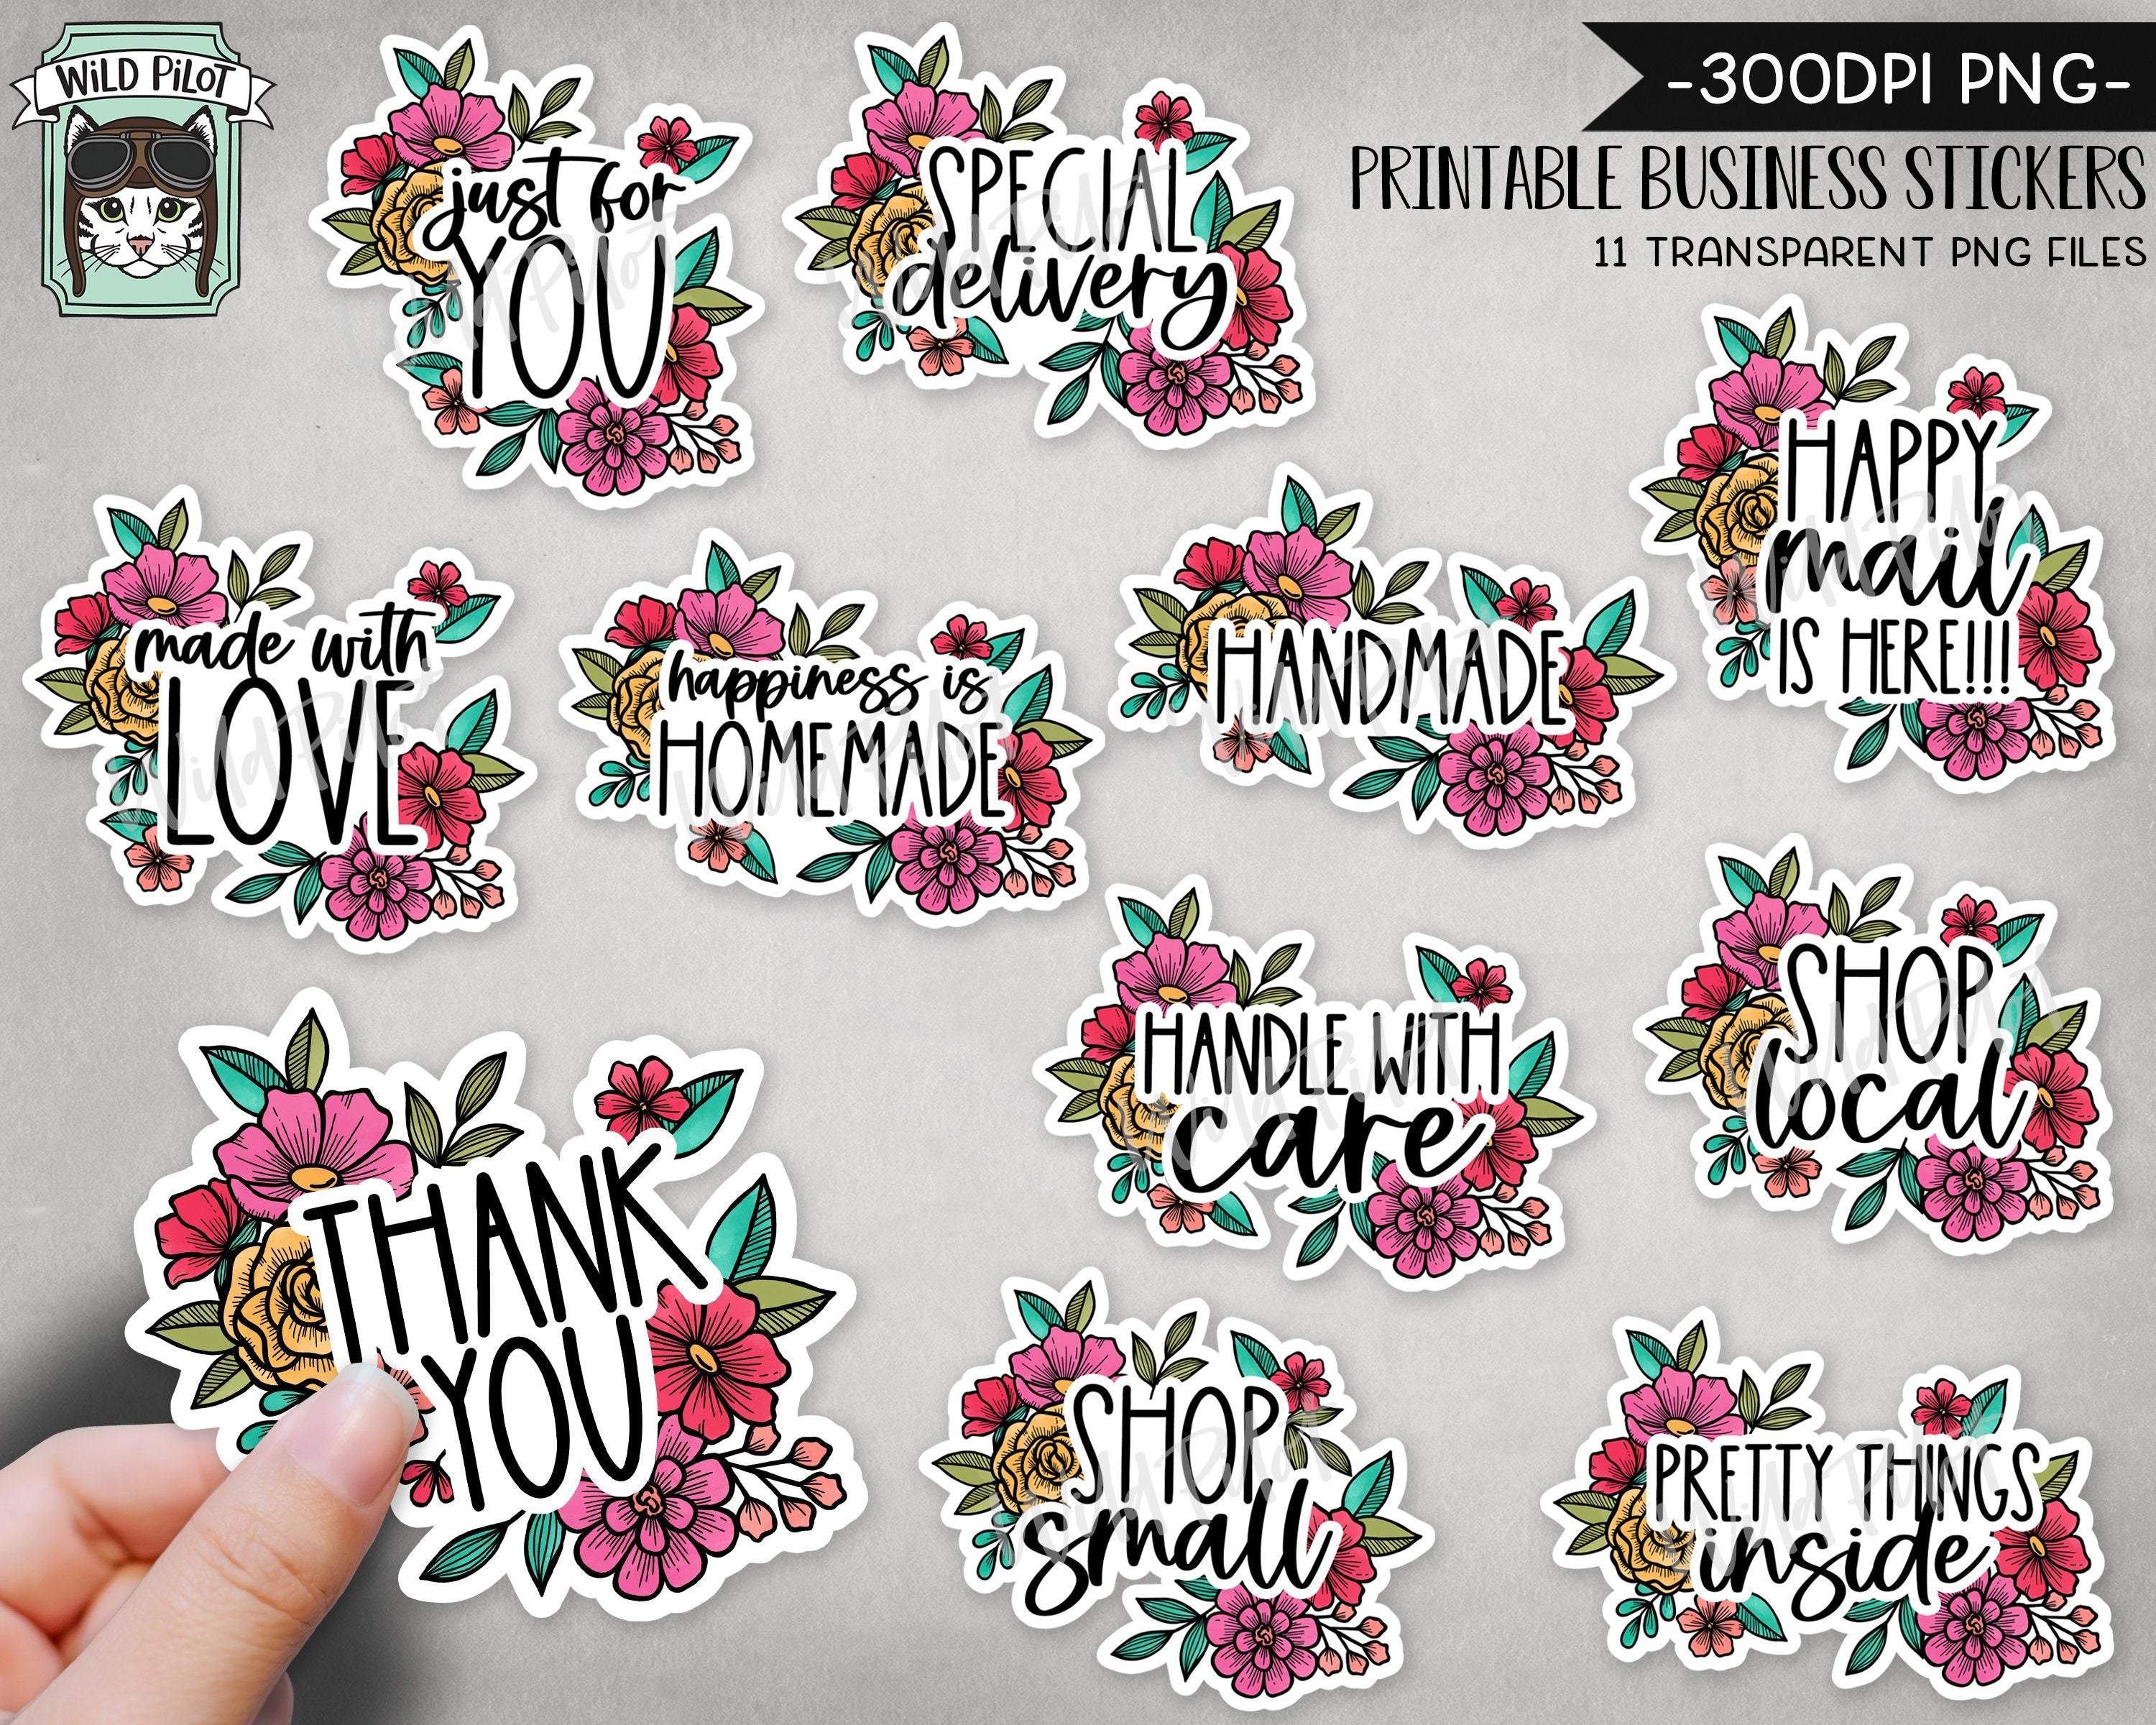 Pretty Things Inside Sticker Handmade With Love Sticker